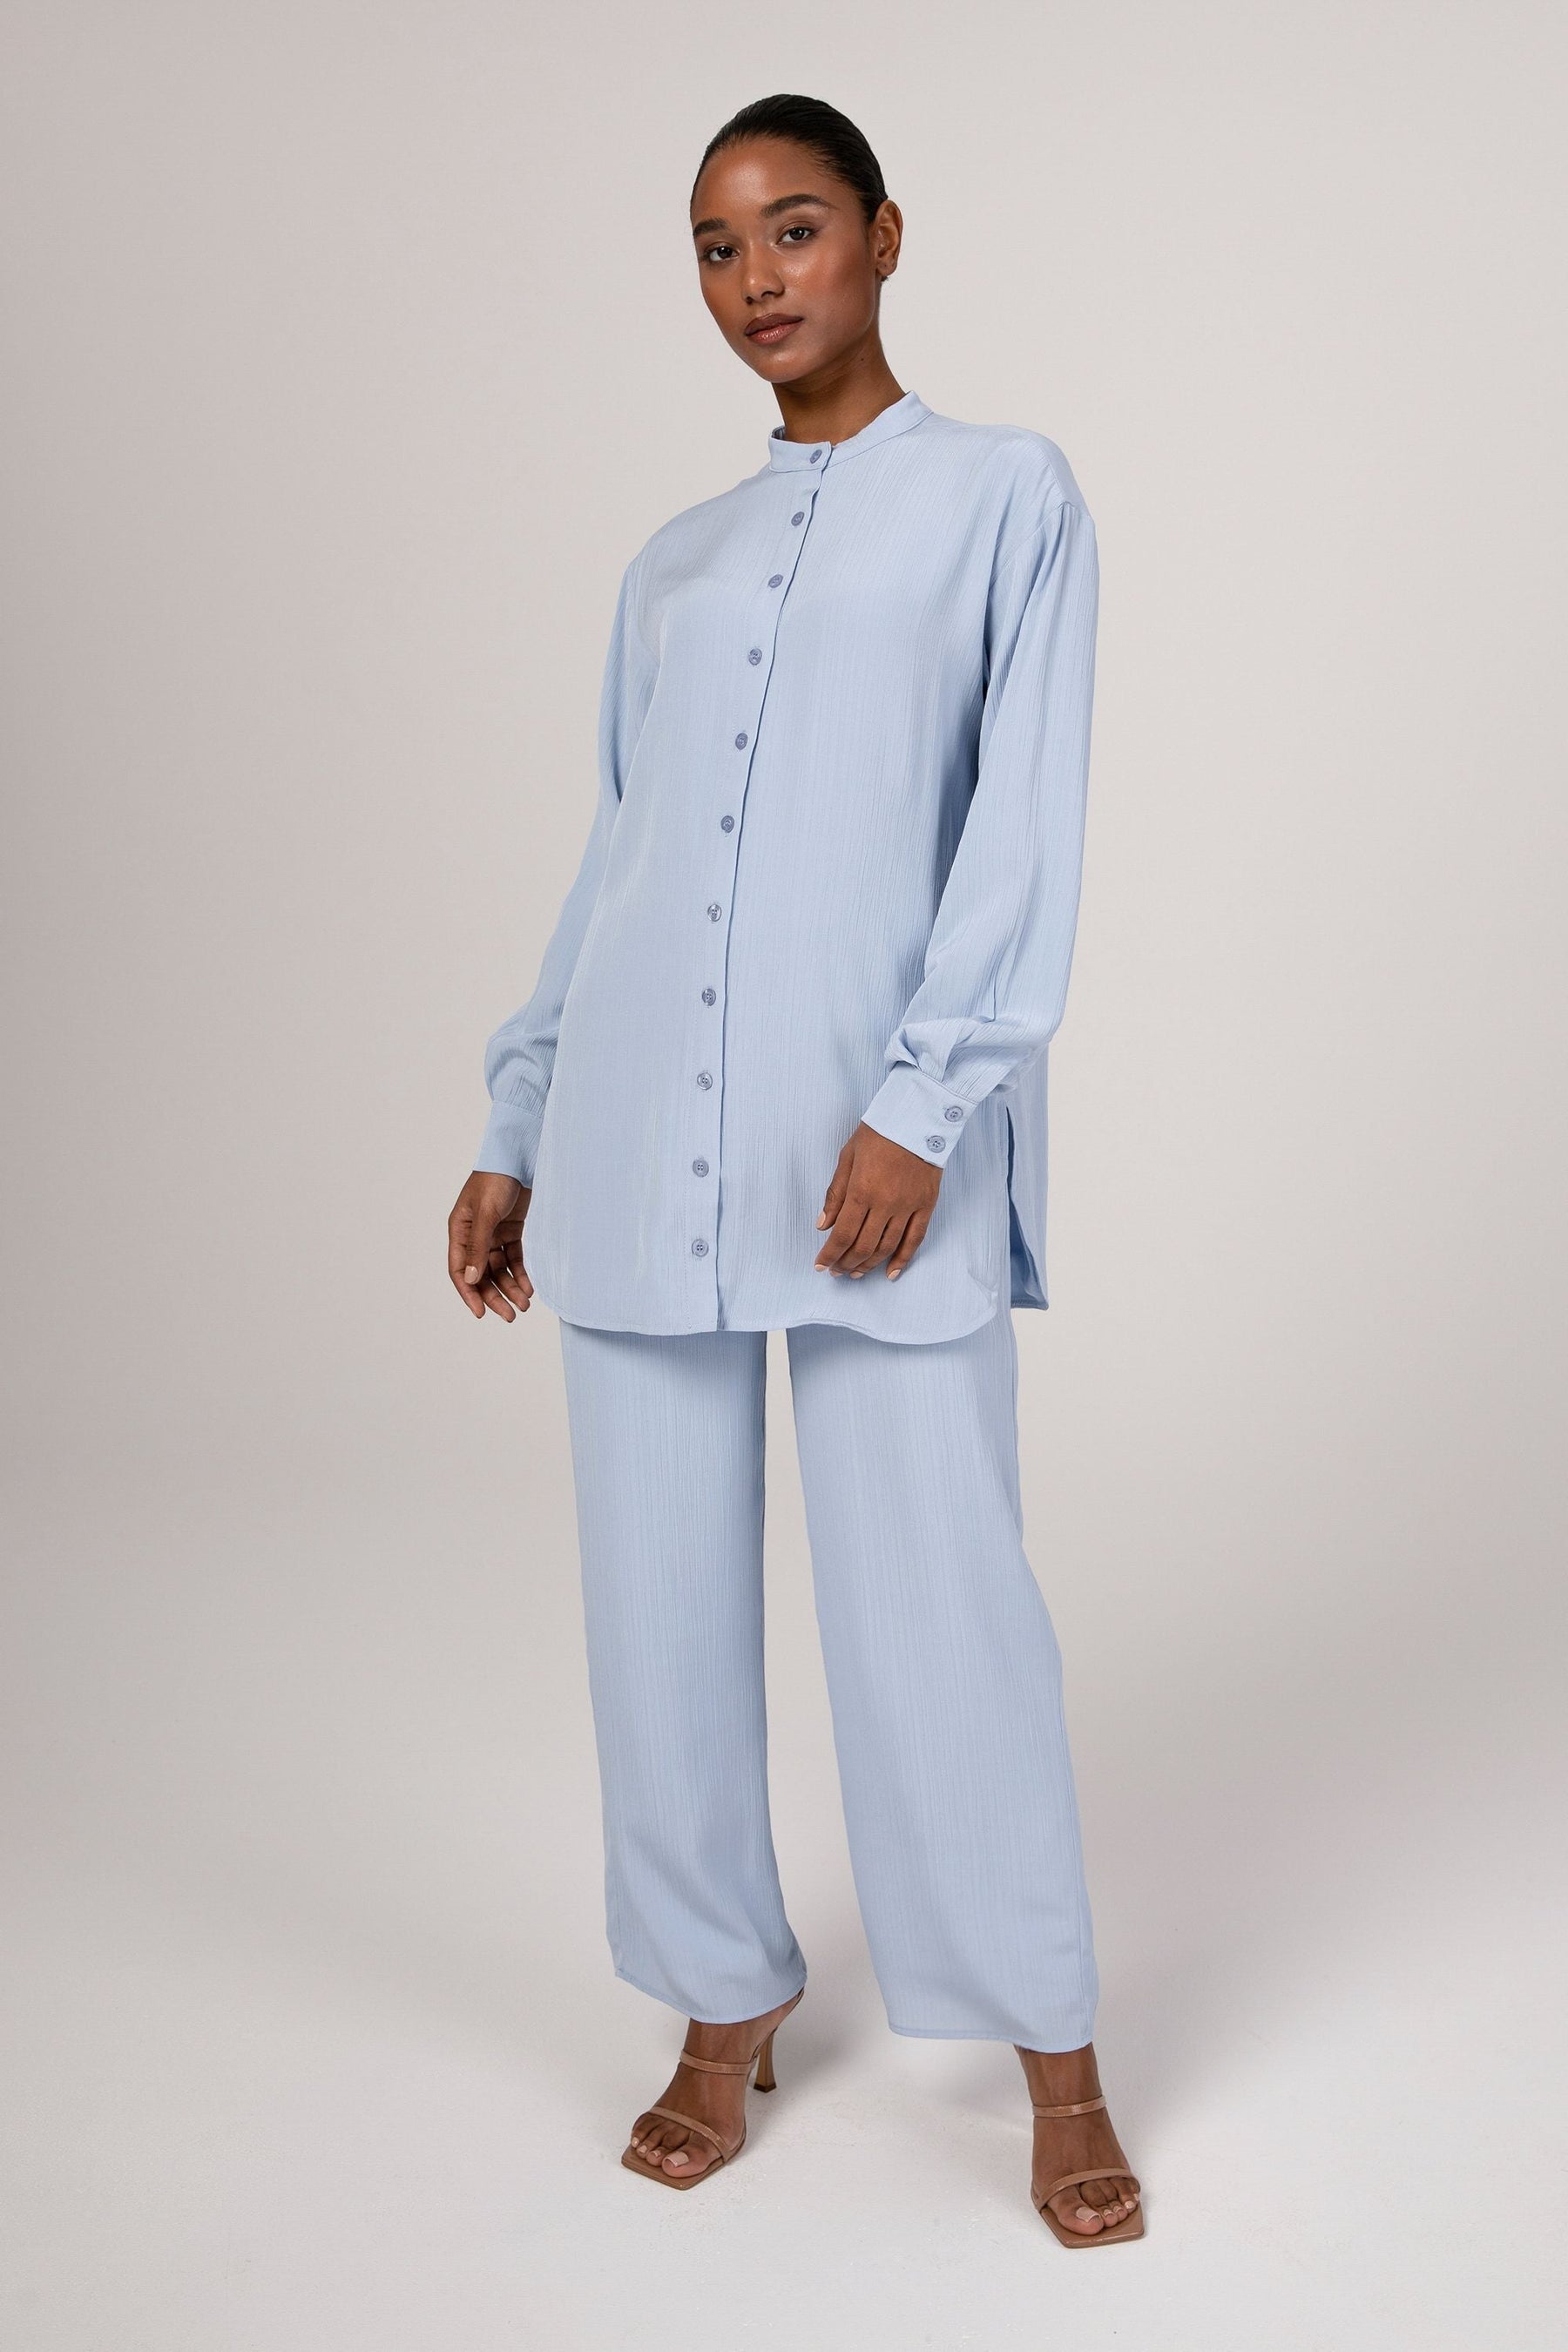 Nashwa Textured Rayon Button Down Tunic - Powder Blue Veiled 